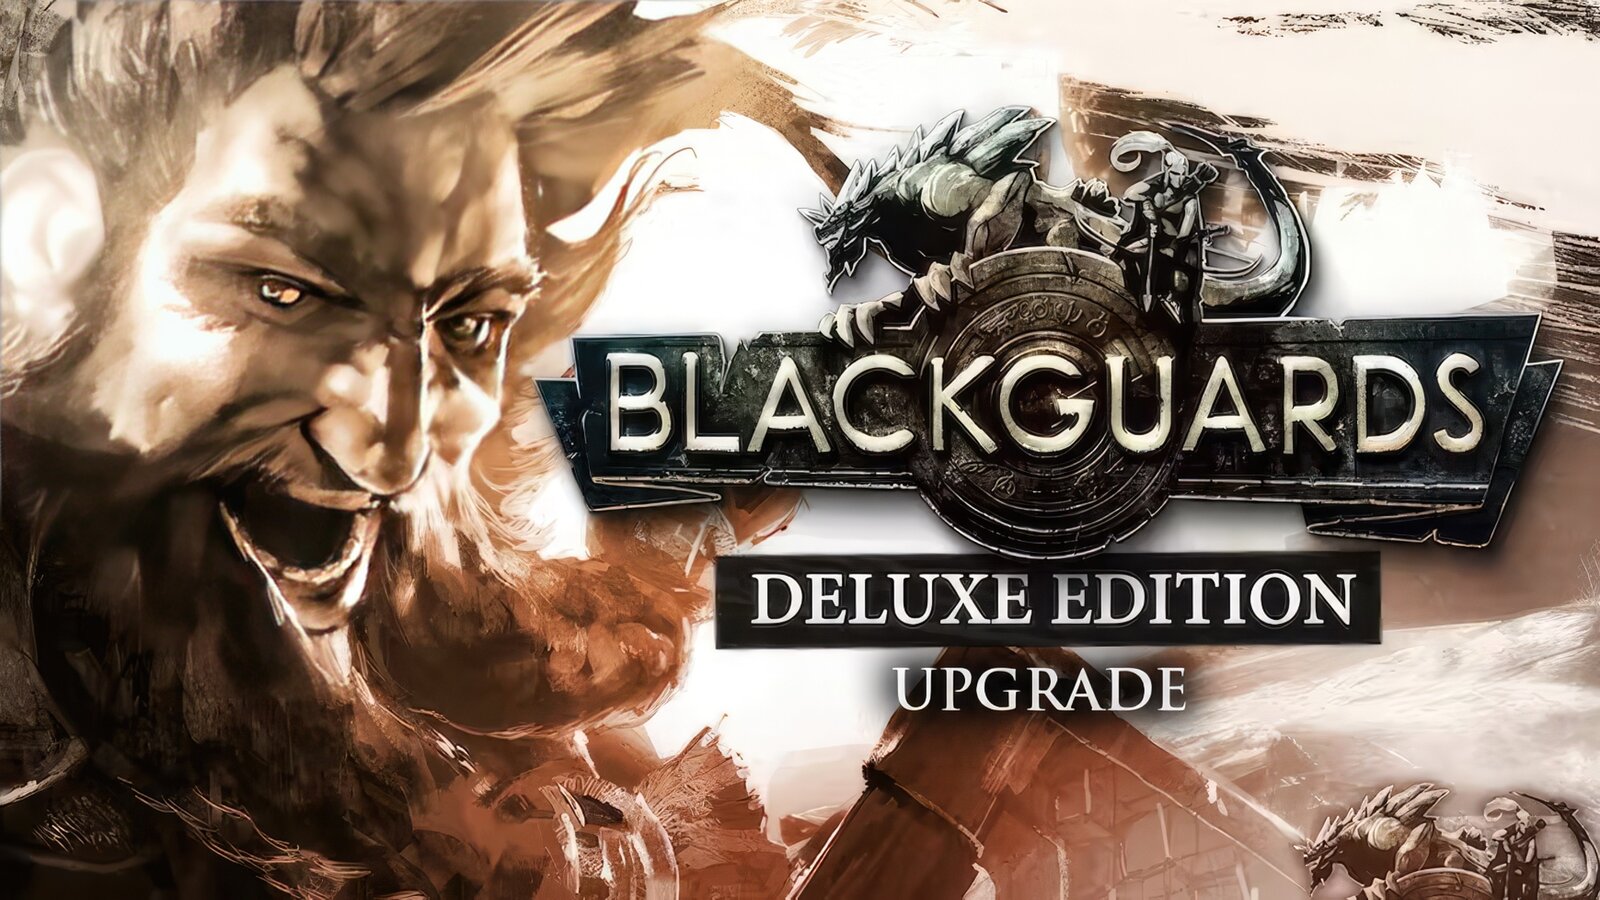 Blackguards - Deluxe Edition Upgrade